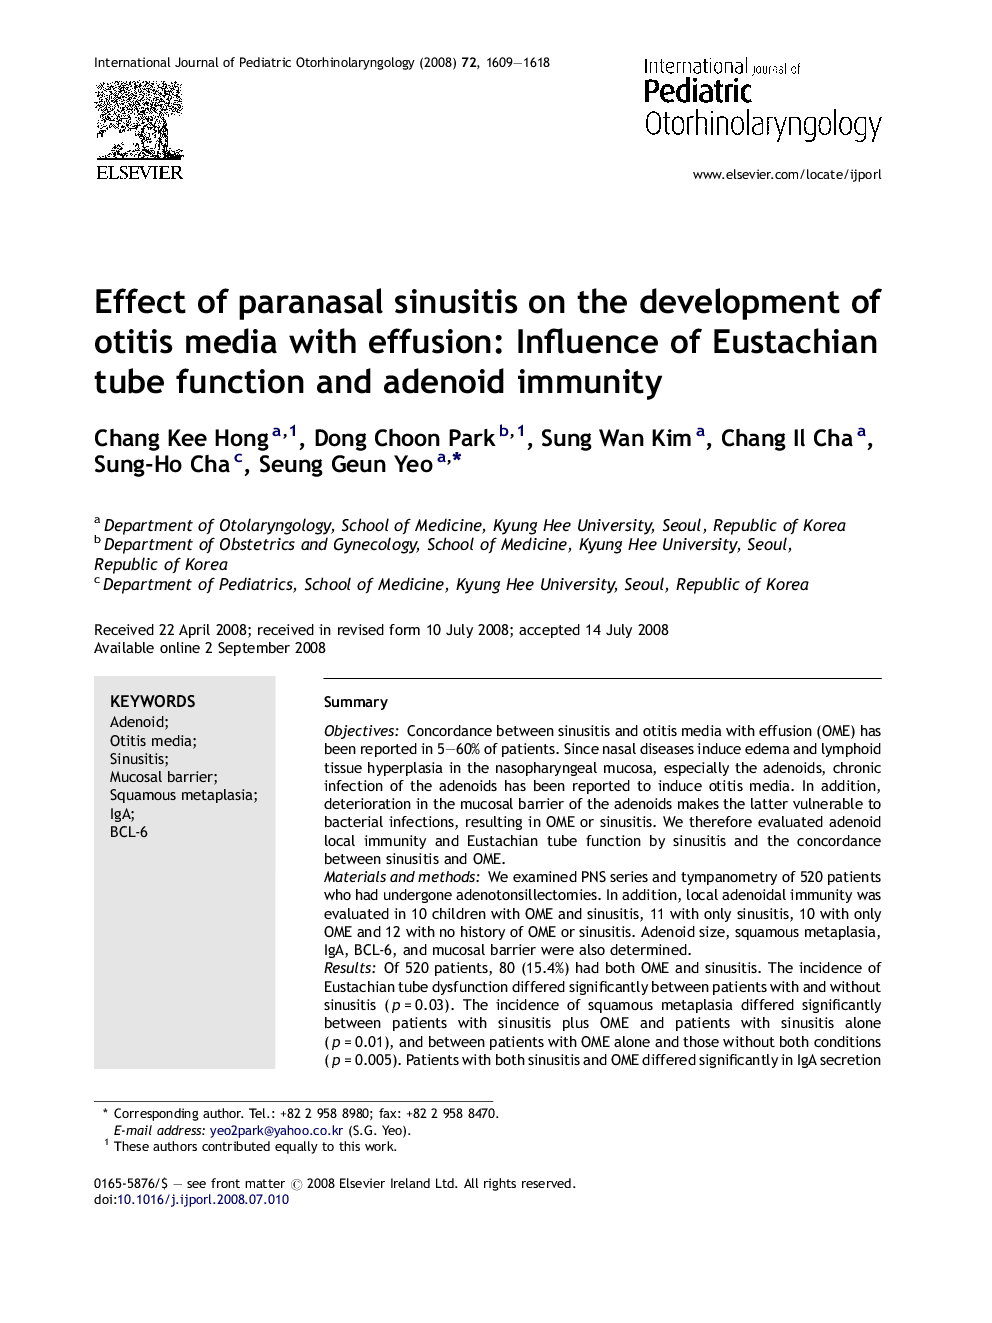 Effect of paranasal sinusitis on the development of otitis media with effusion: Influence of Eustachian tube function and adenoid immunity